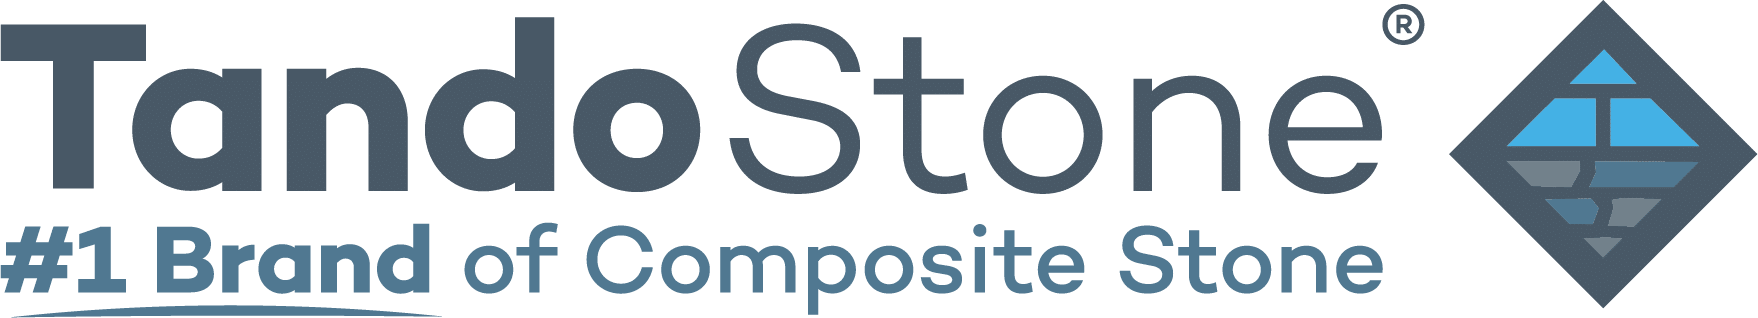 TandoStone, the #1 Brand of Composite Stone